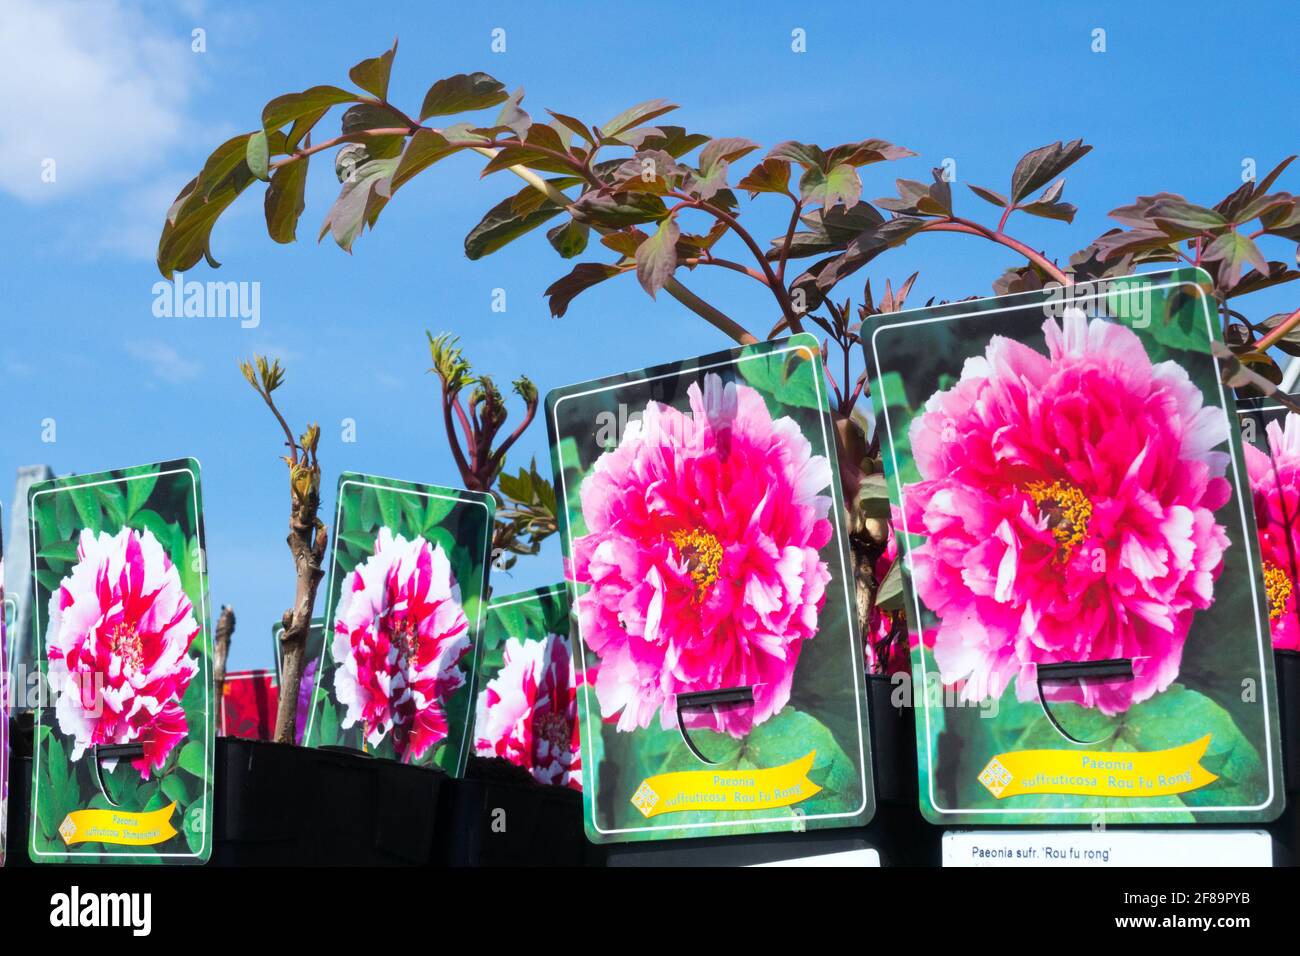 Garden centre plants display Tree Peonies for sale, Paeonia x suffruticosa Stock Photo